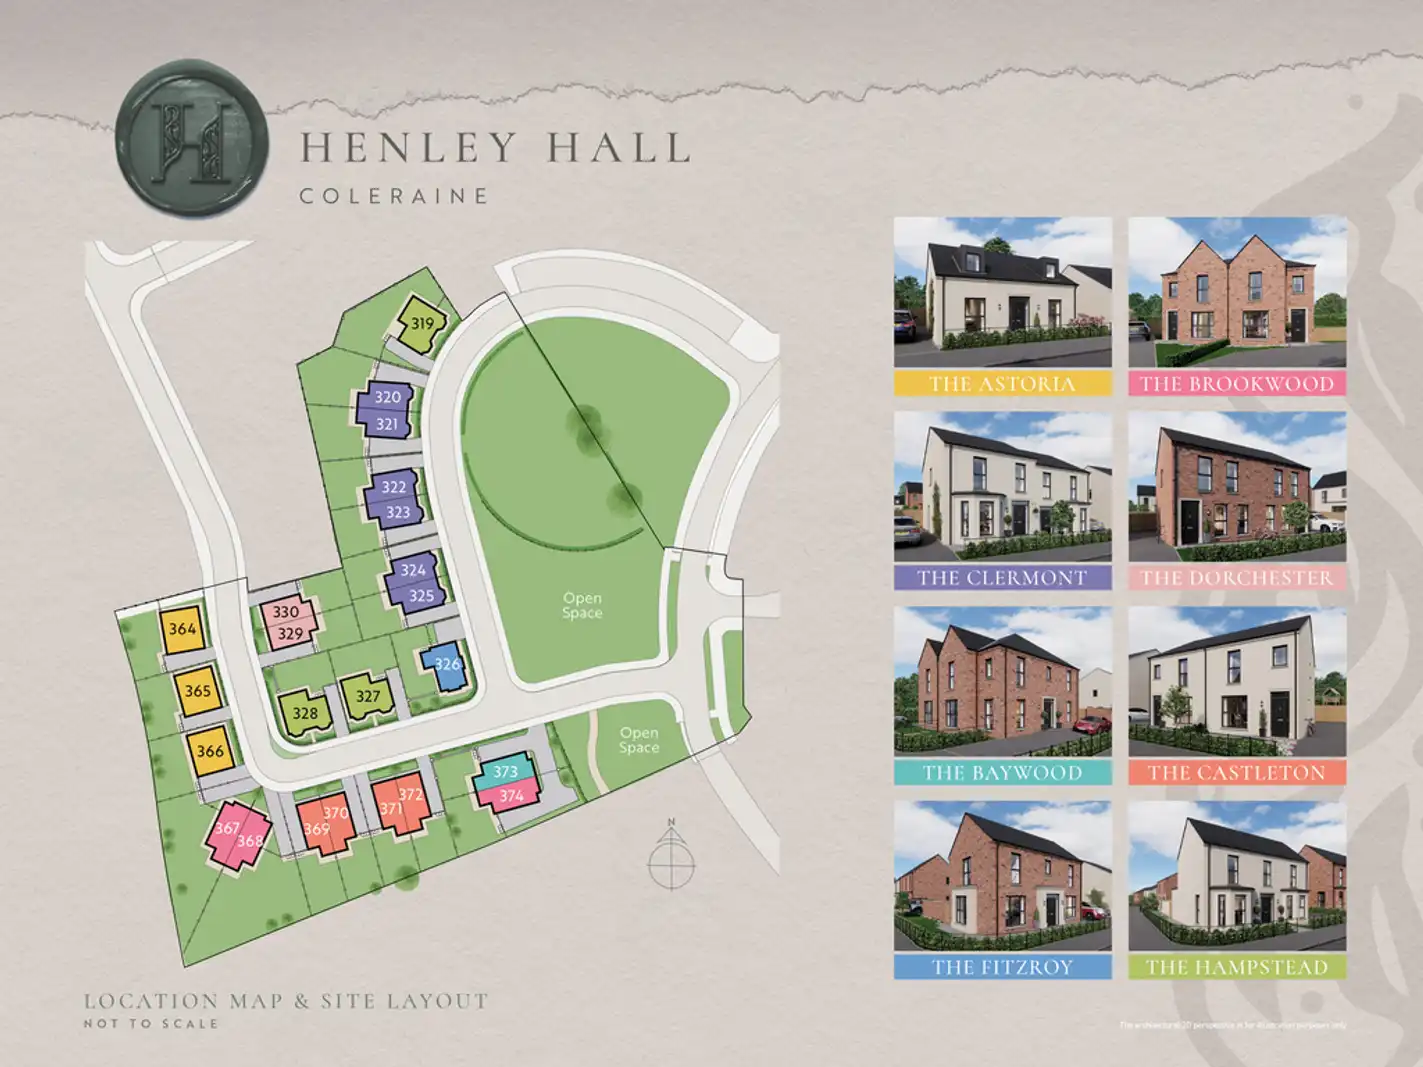 Site 372 (The Castleton) Henley Hall, Coleraine, County Antrim